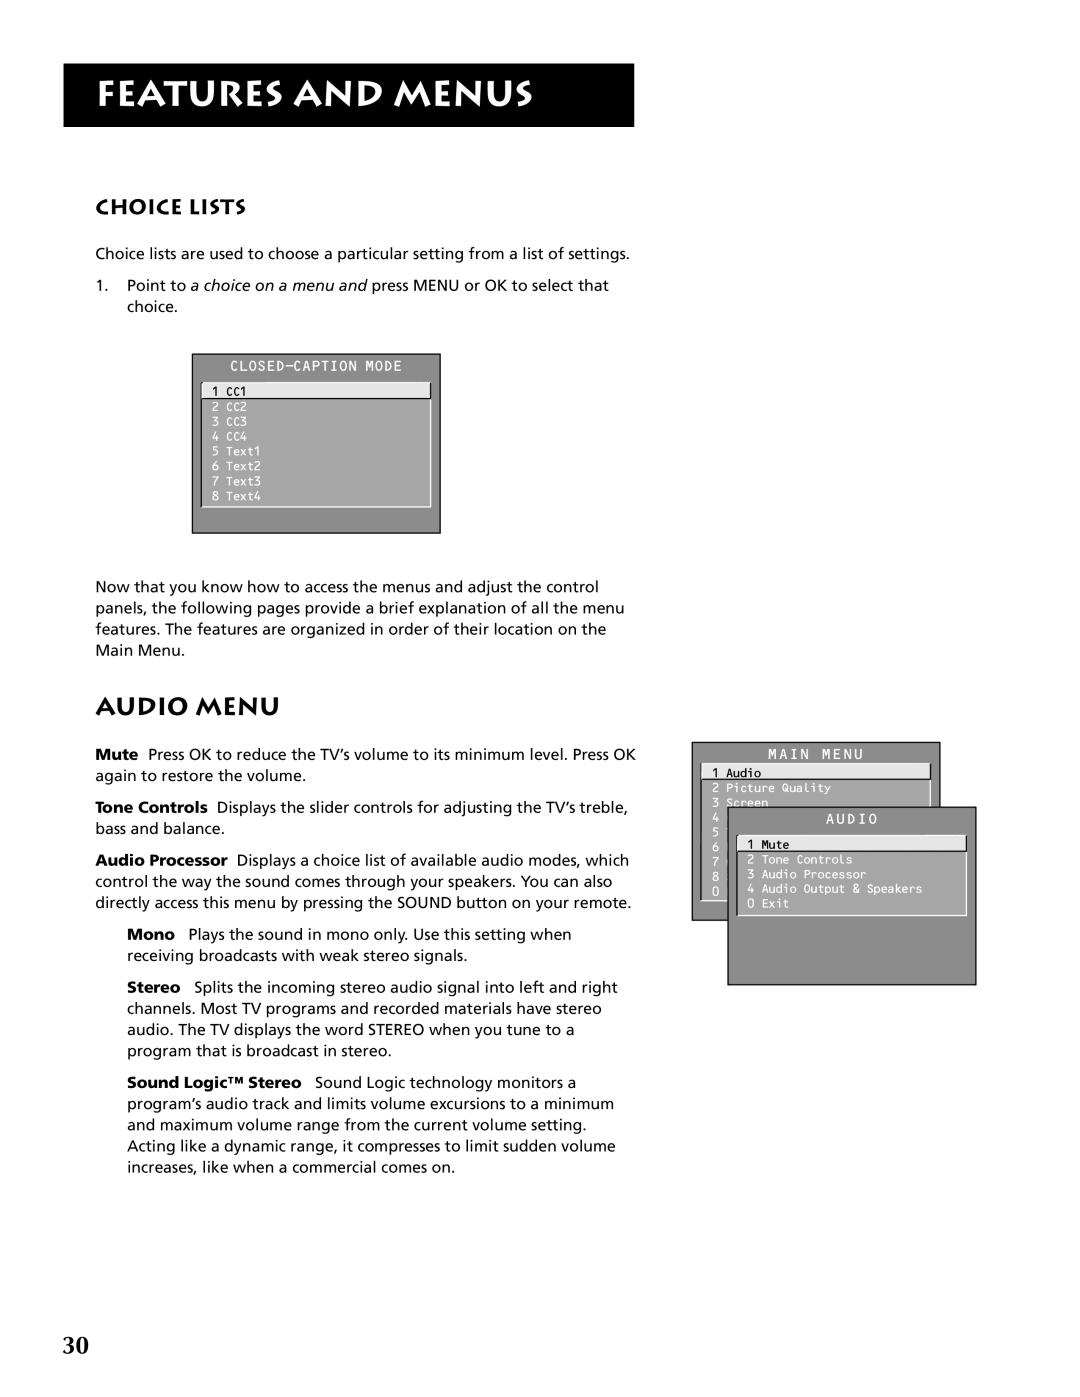 RCA F32691 manual Audio Menu, Choice Lists, Features And Menus 